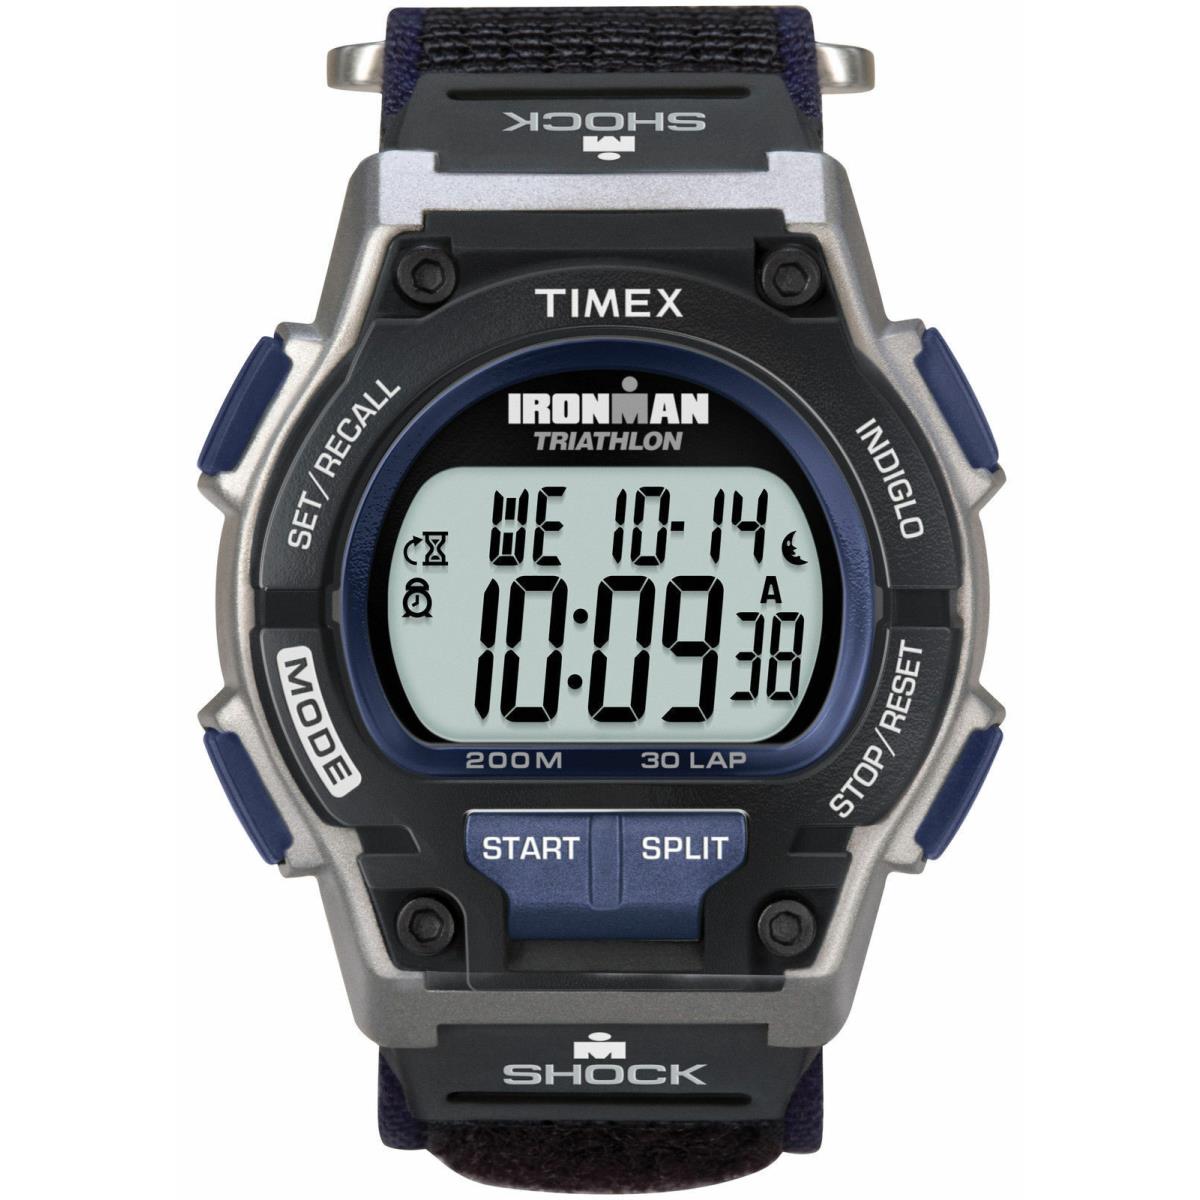 Timex T5K198 Ironman Triathlon 30-Lap Nylon Watch Shock Indiglo Alarm - Blue Band, Black Bezel